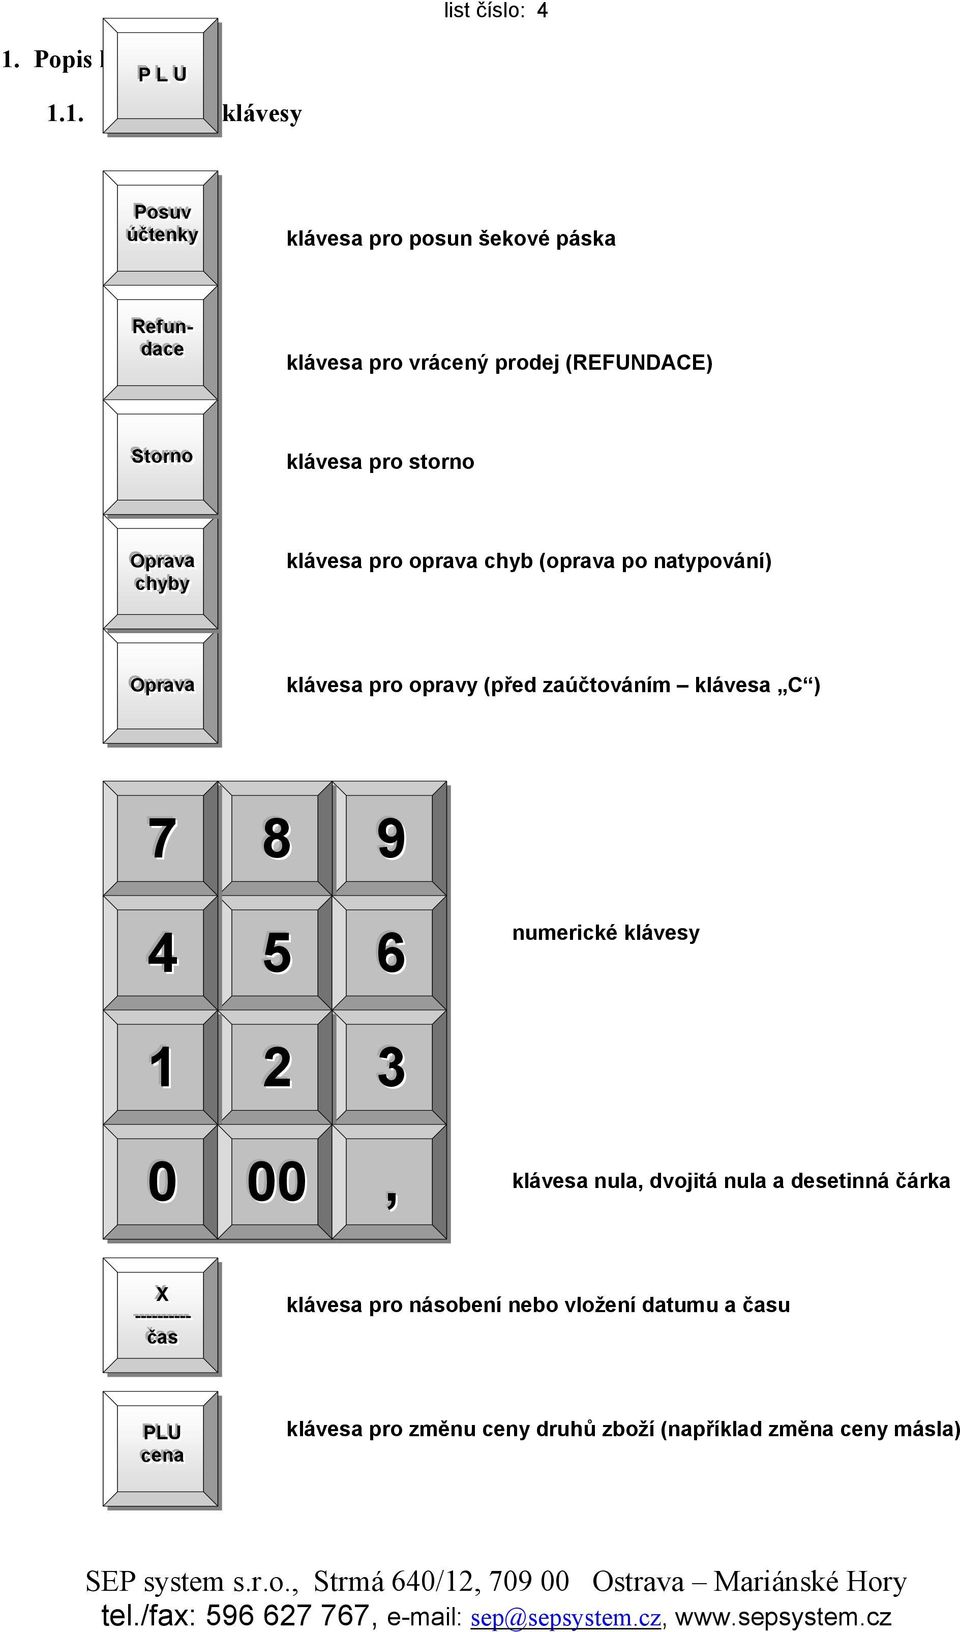 1. Základní klávesy PPoossuuvv úúččt tteennkkyy klávesa pro posun šekové páska RReef ffuunn- -- ddaaccee klávesa pro vrácený prodej (REFUNDACE) SSt